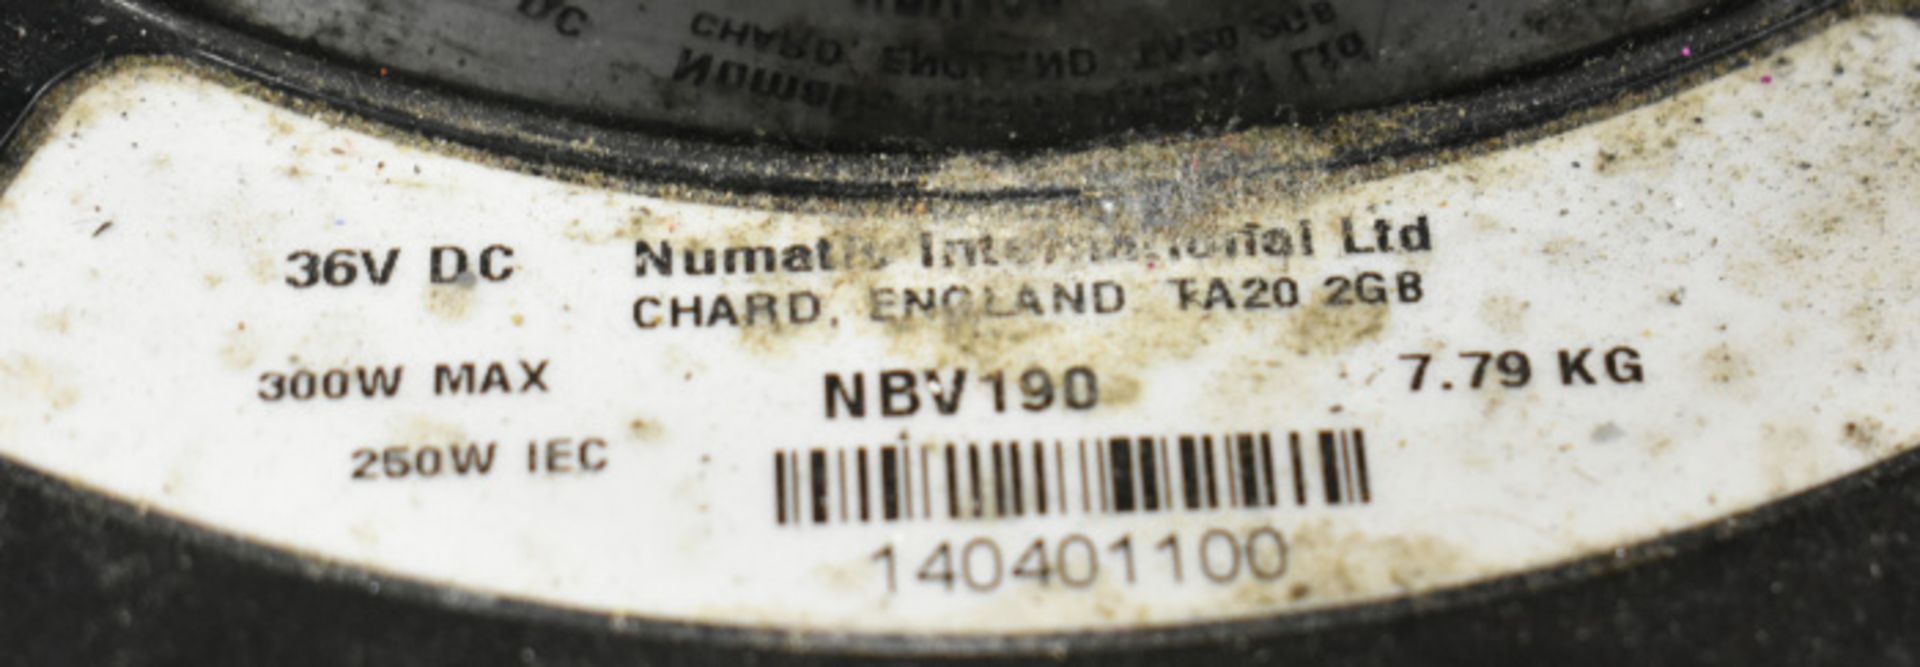 6x Numatic NBV190 Vacuum Cleaners - Image 3 of 3